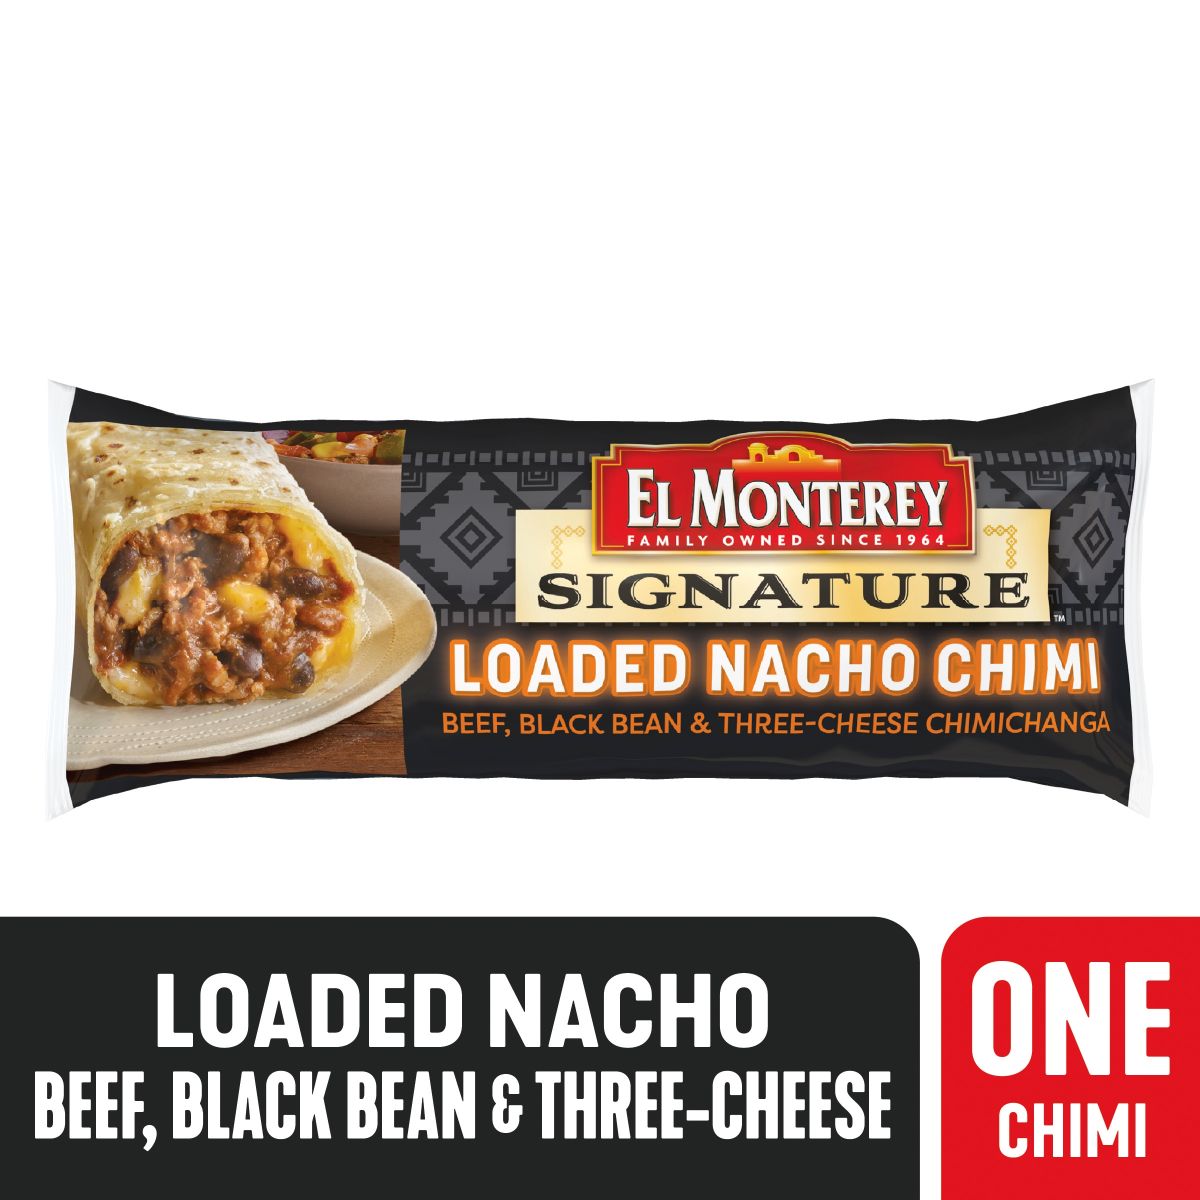 El Monterey Spicy Bean & Cheese Chimichangas